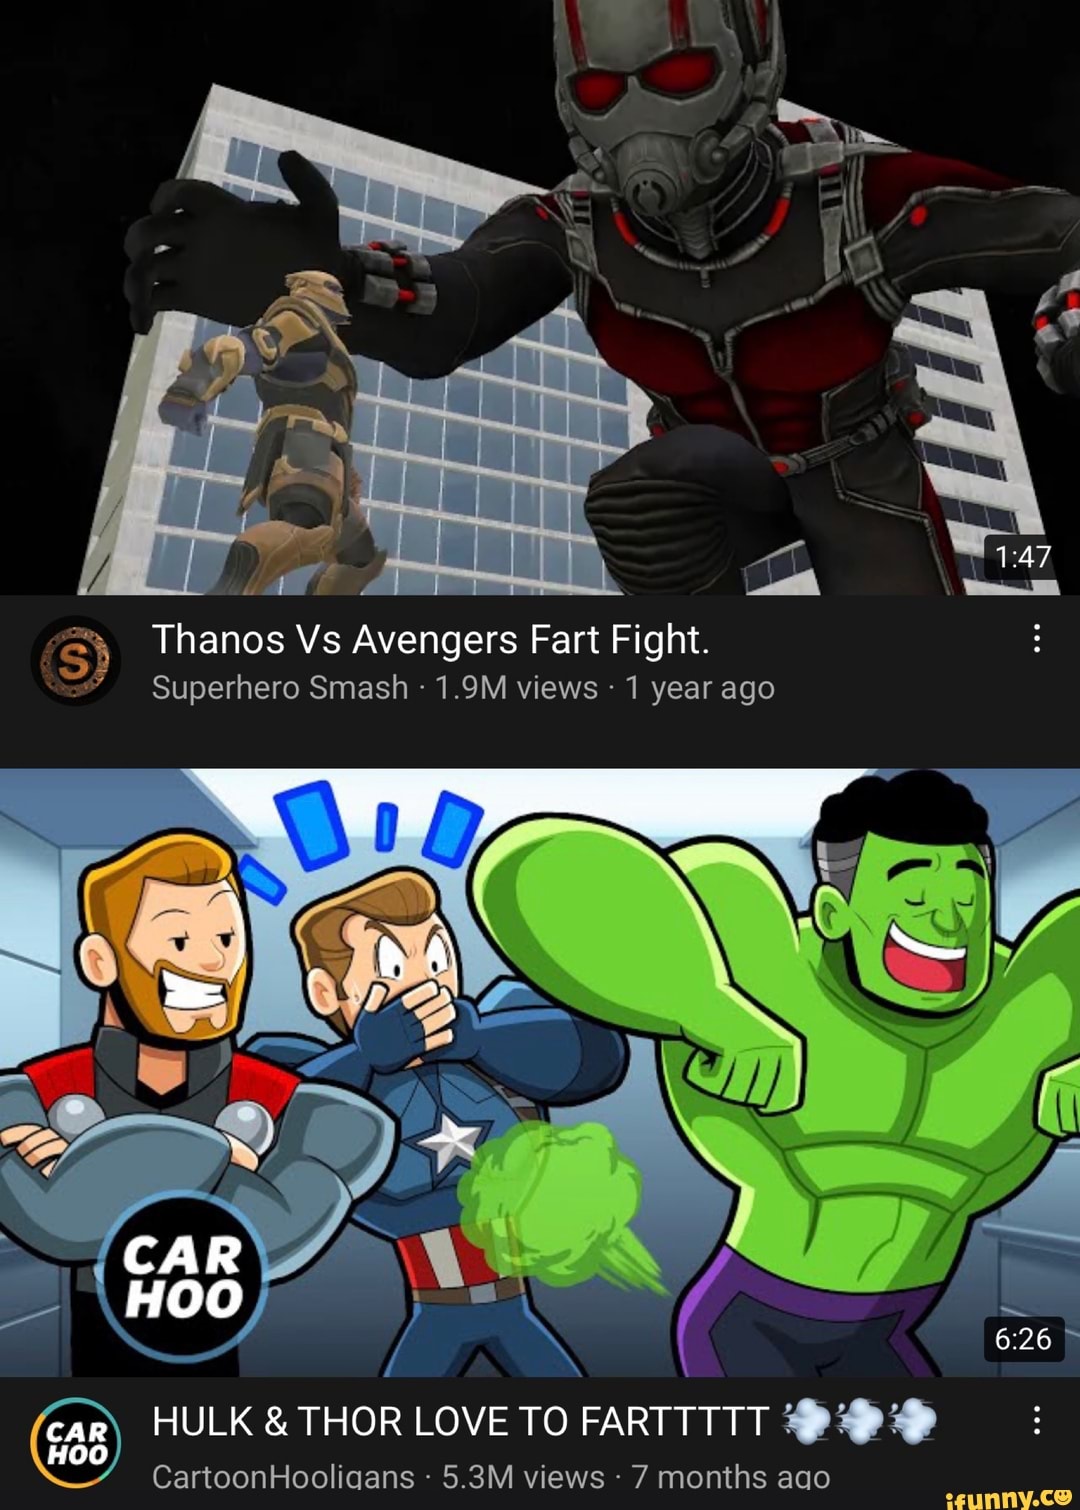 Thanos Vs Avengers Fart Fight. Superhero Smash  views - 1 year ago  CAR HOO car HULK & THOR LOVE TO FARTTTTT CartoonHooliaans  views 7  months ago 